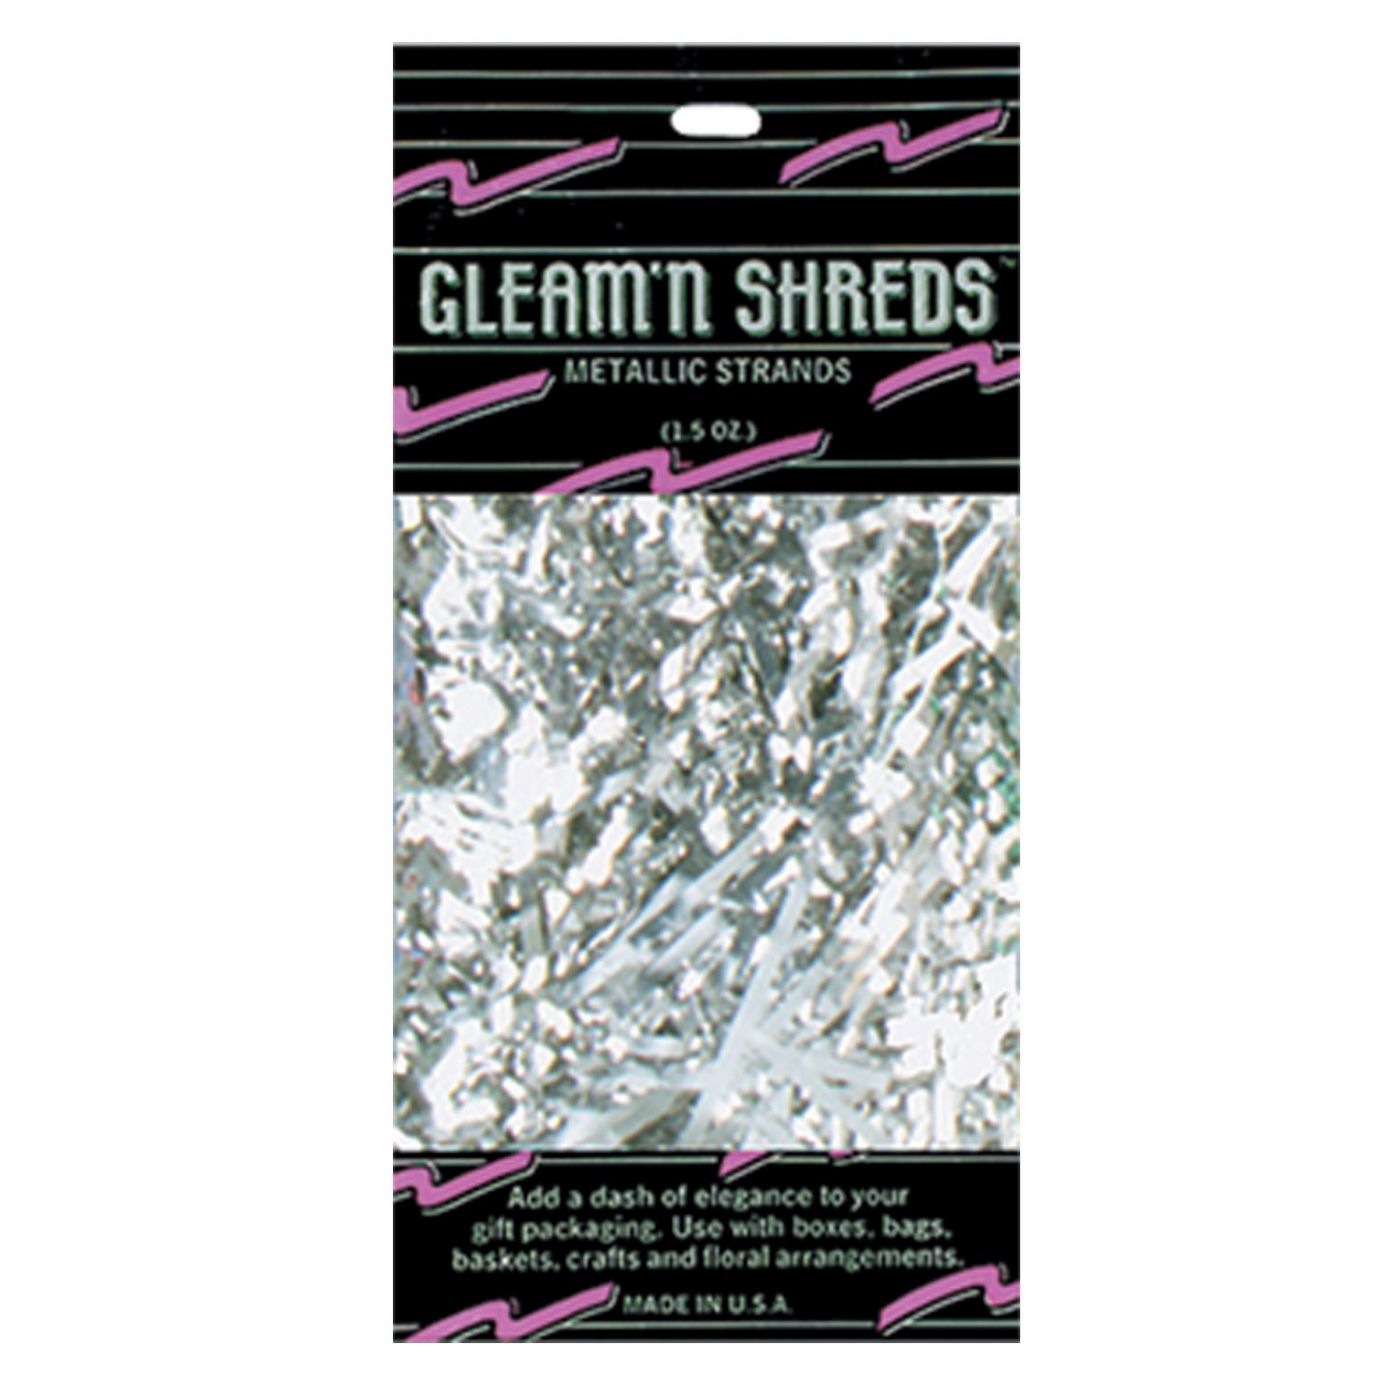 Gleam 'N Shreds Metallic Strands image